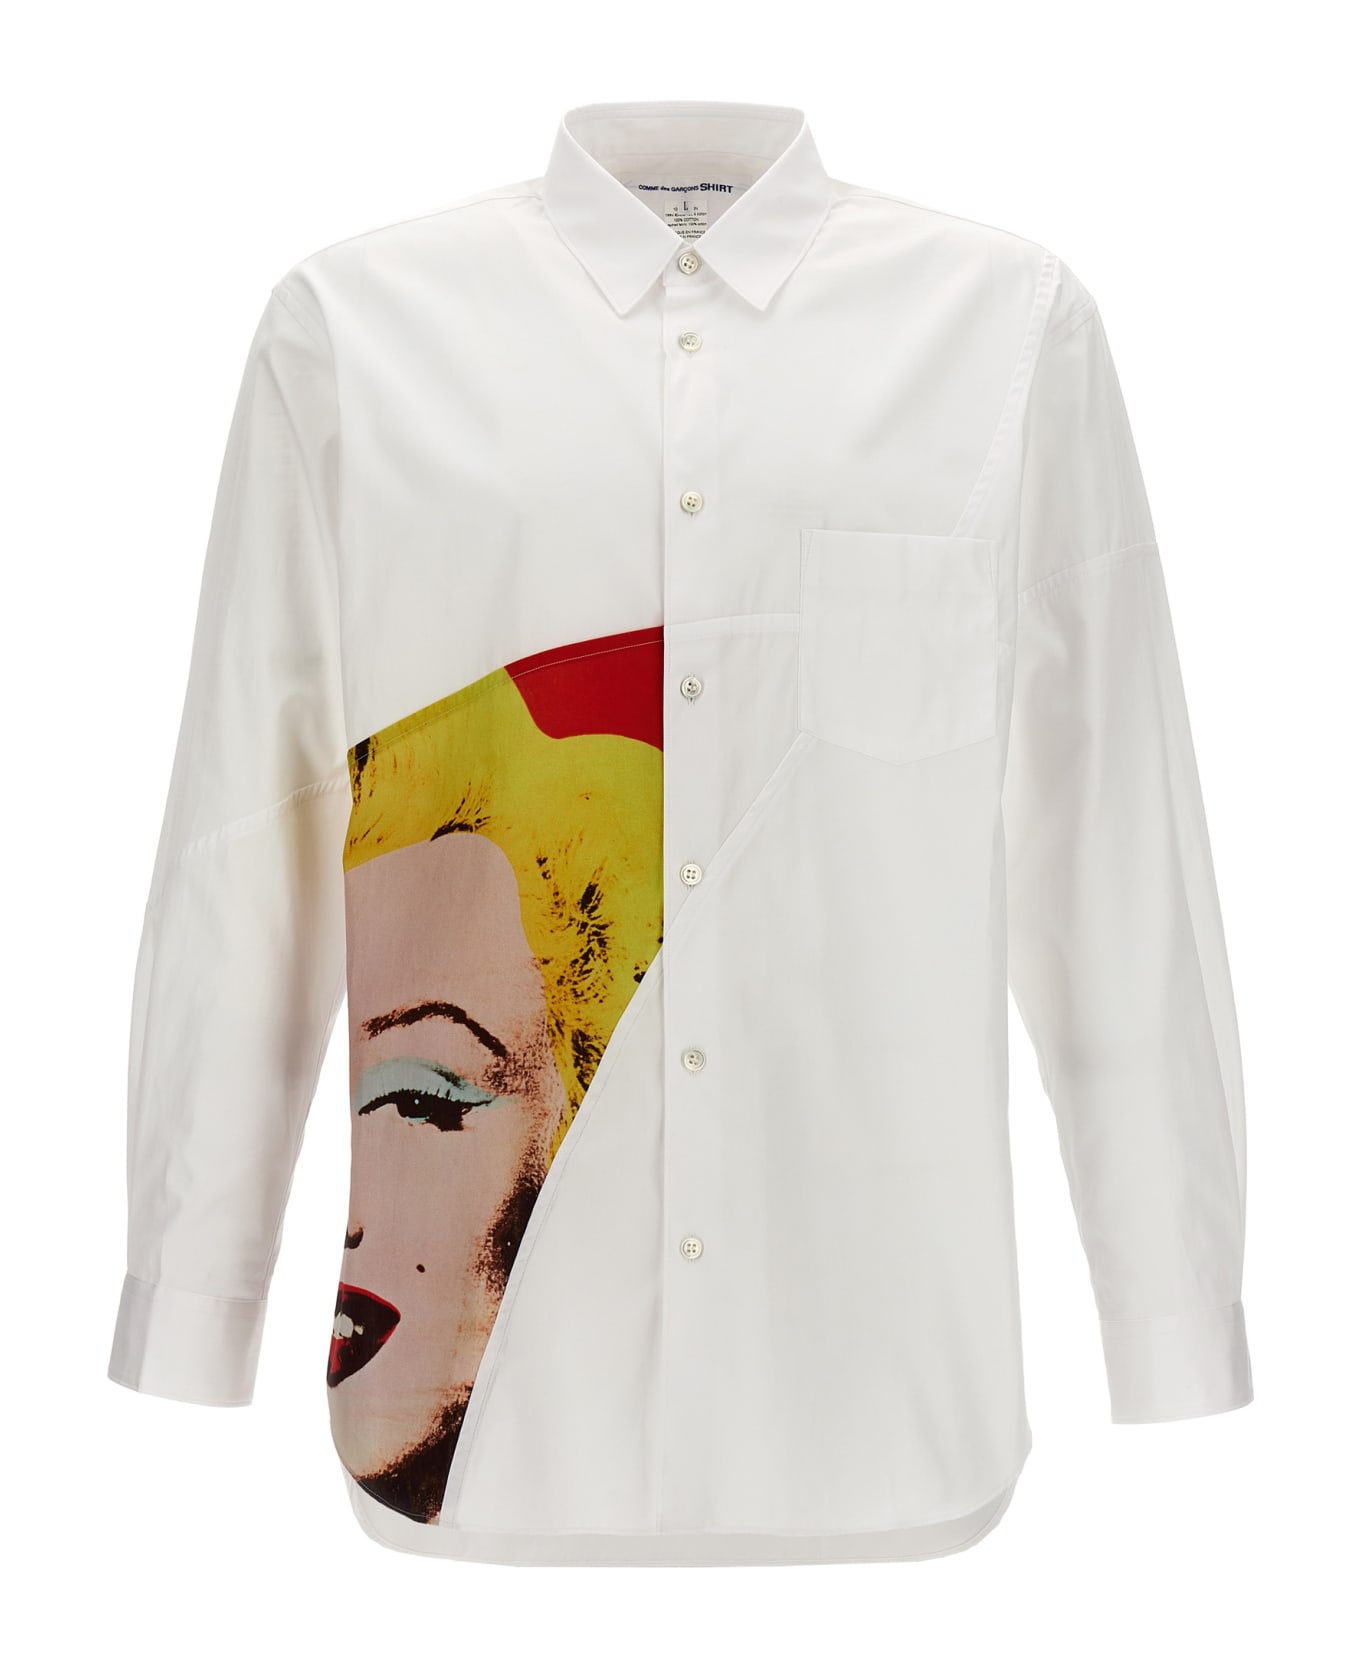 Comme des Garçons Shirt 'andy Warhol' Shirt - White Print シャツ